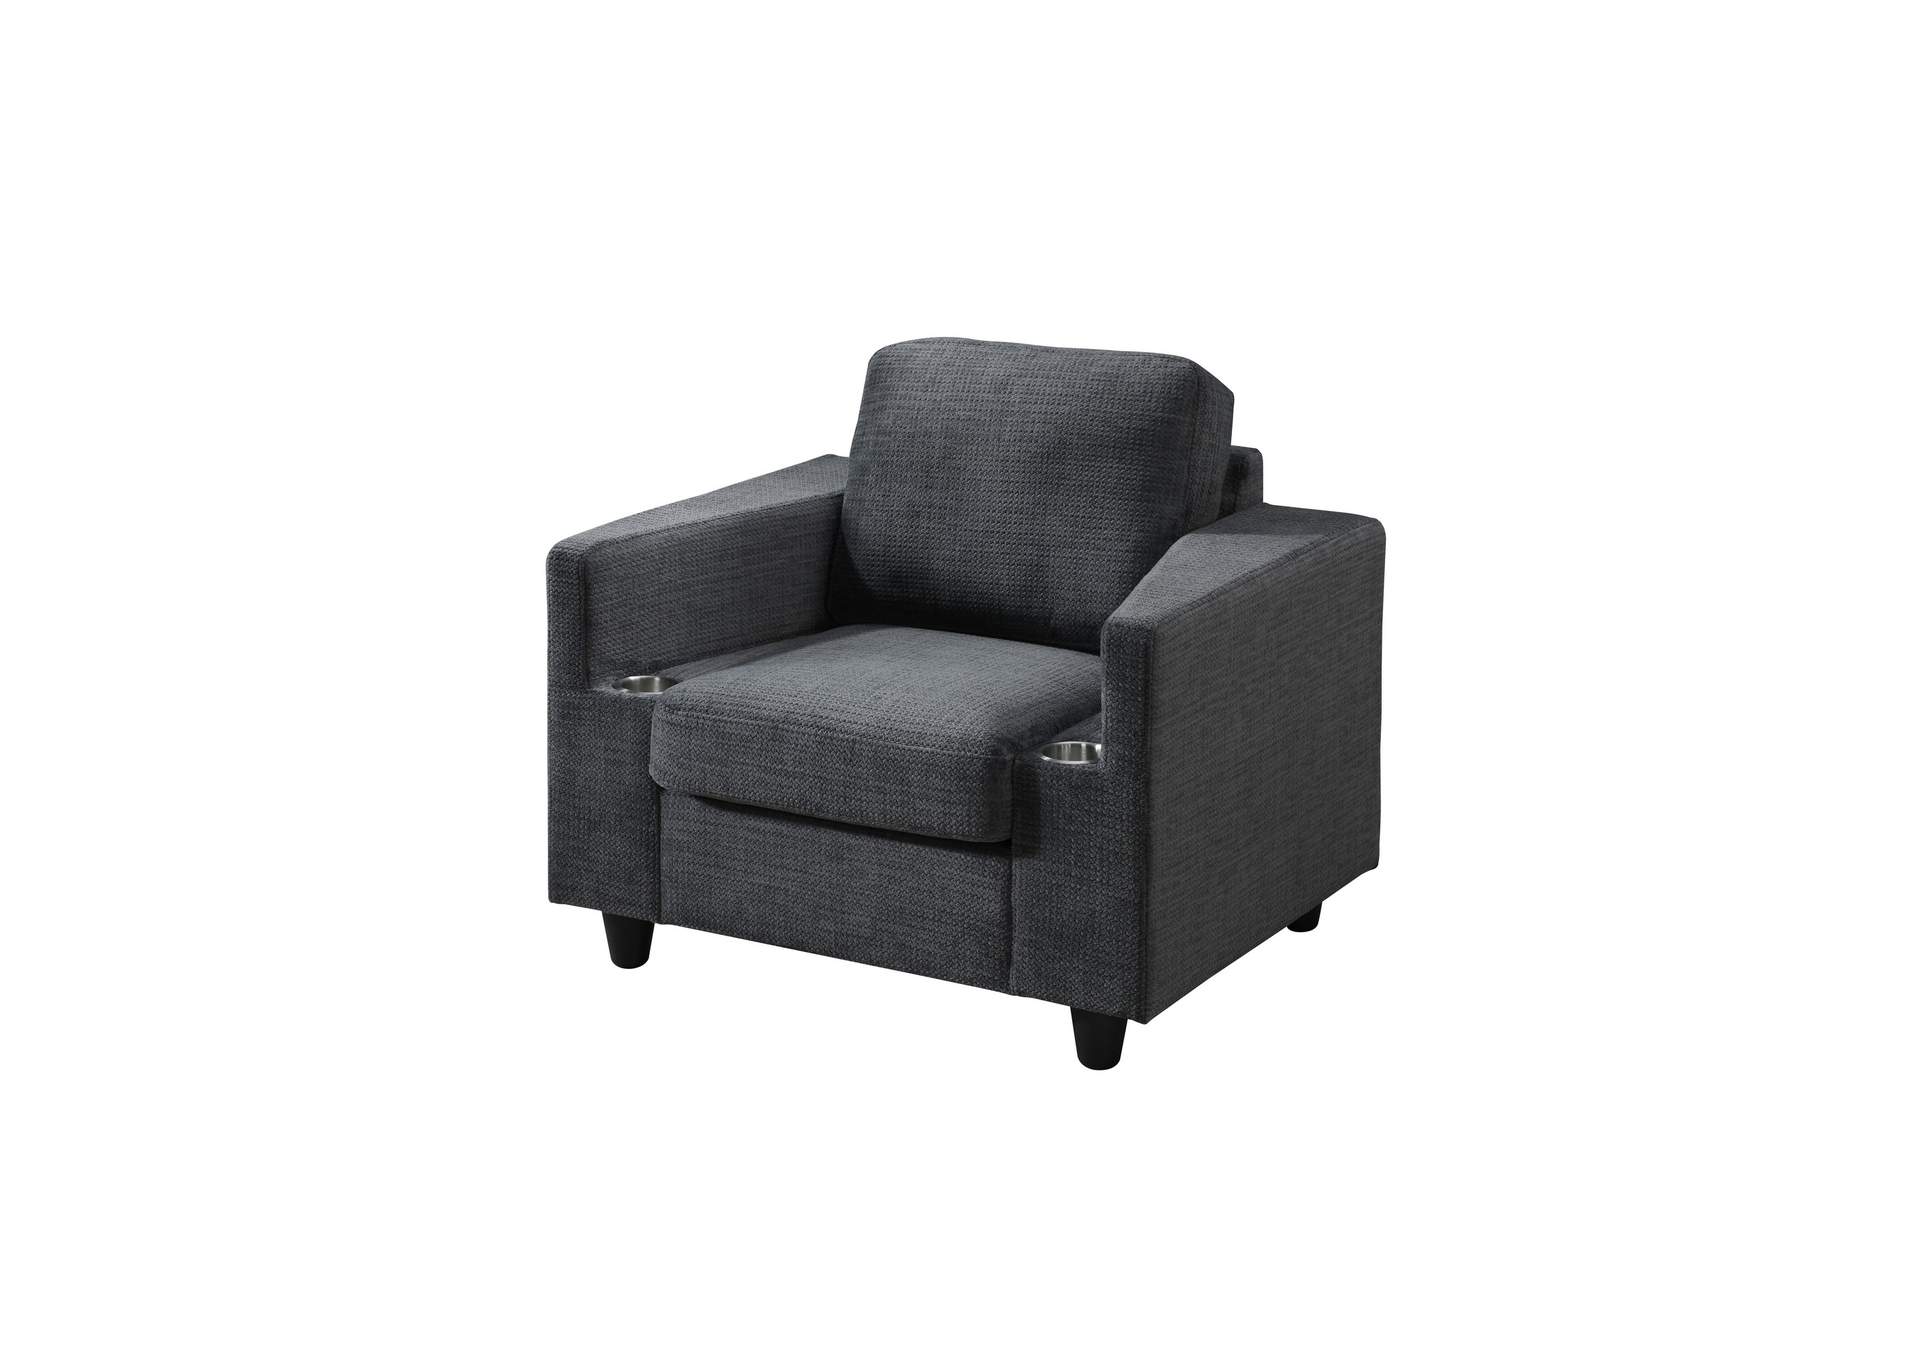 Bear Grey Chair,Global Furniture USA